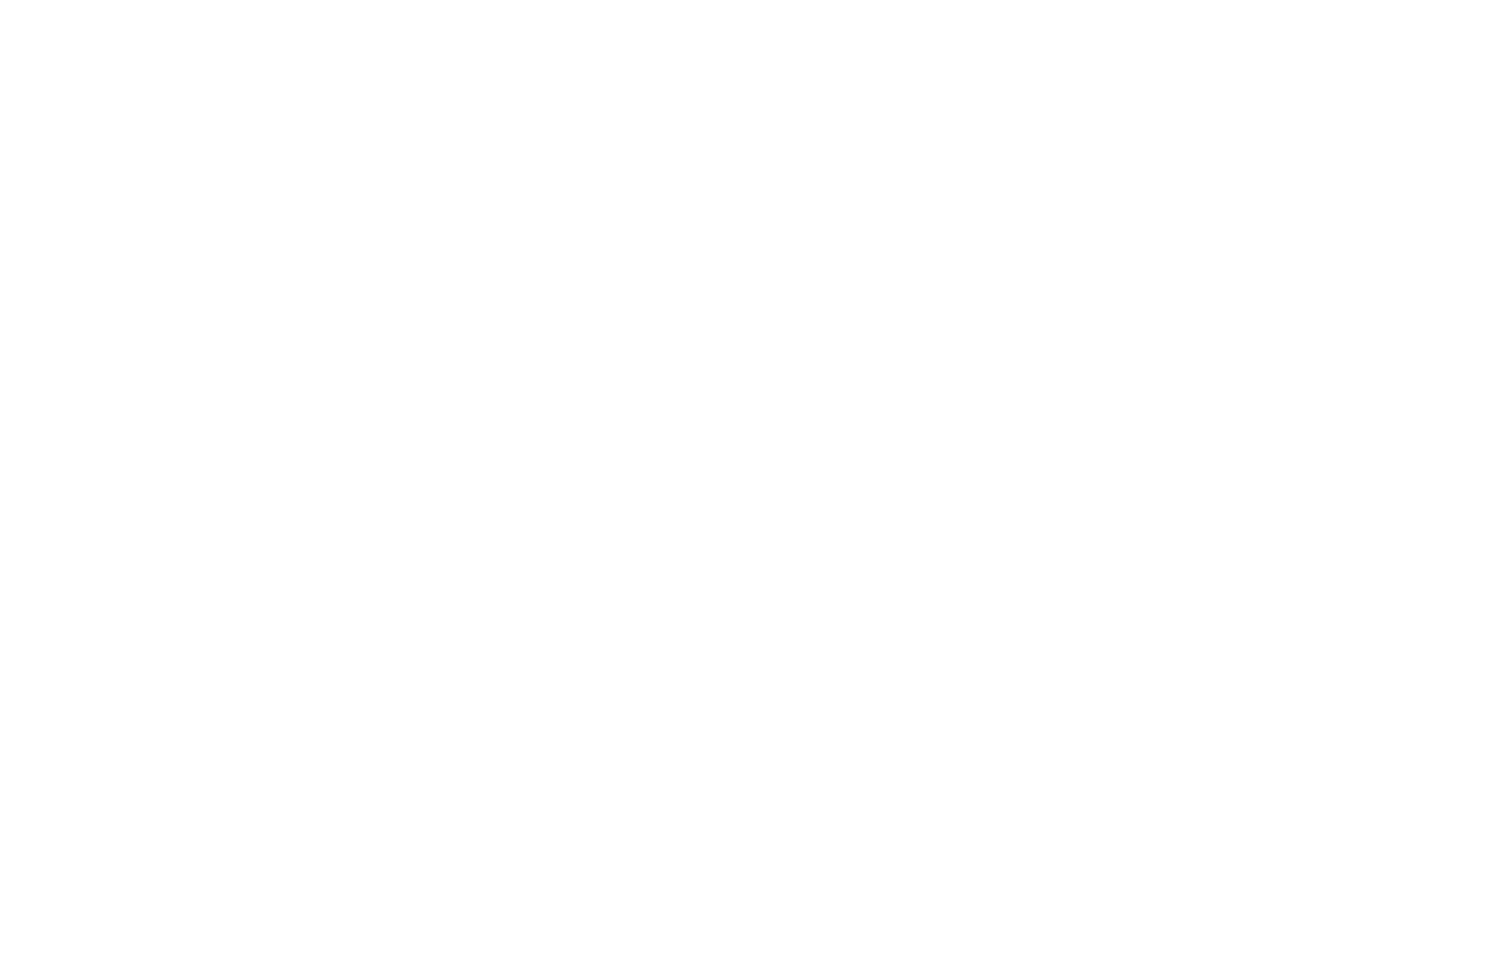 Cypress Design Group